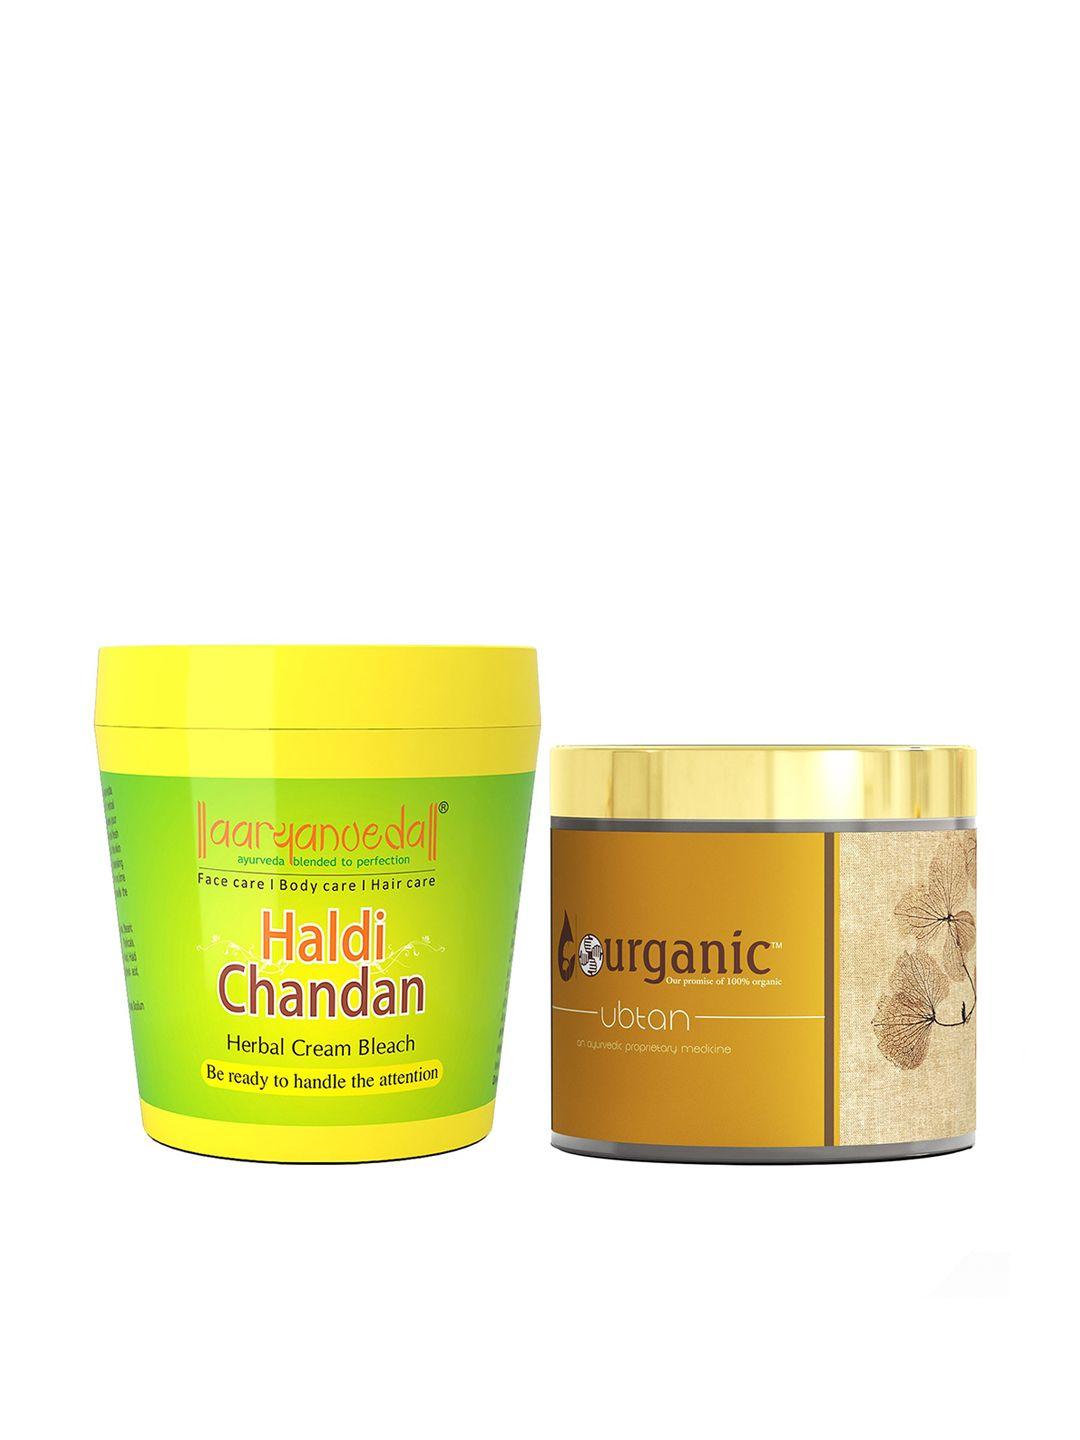 aryanveda haldi chandan bleach cream 250g with ubtan face mask for dirt removal 100g